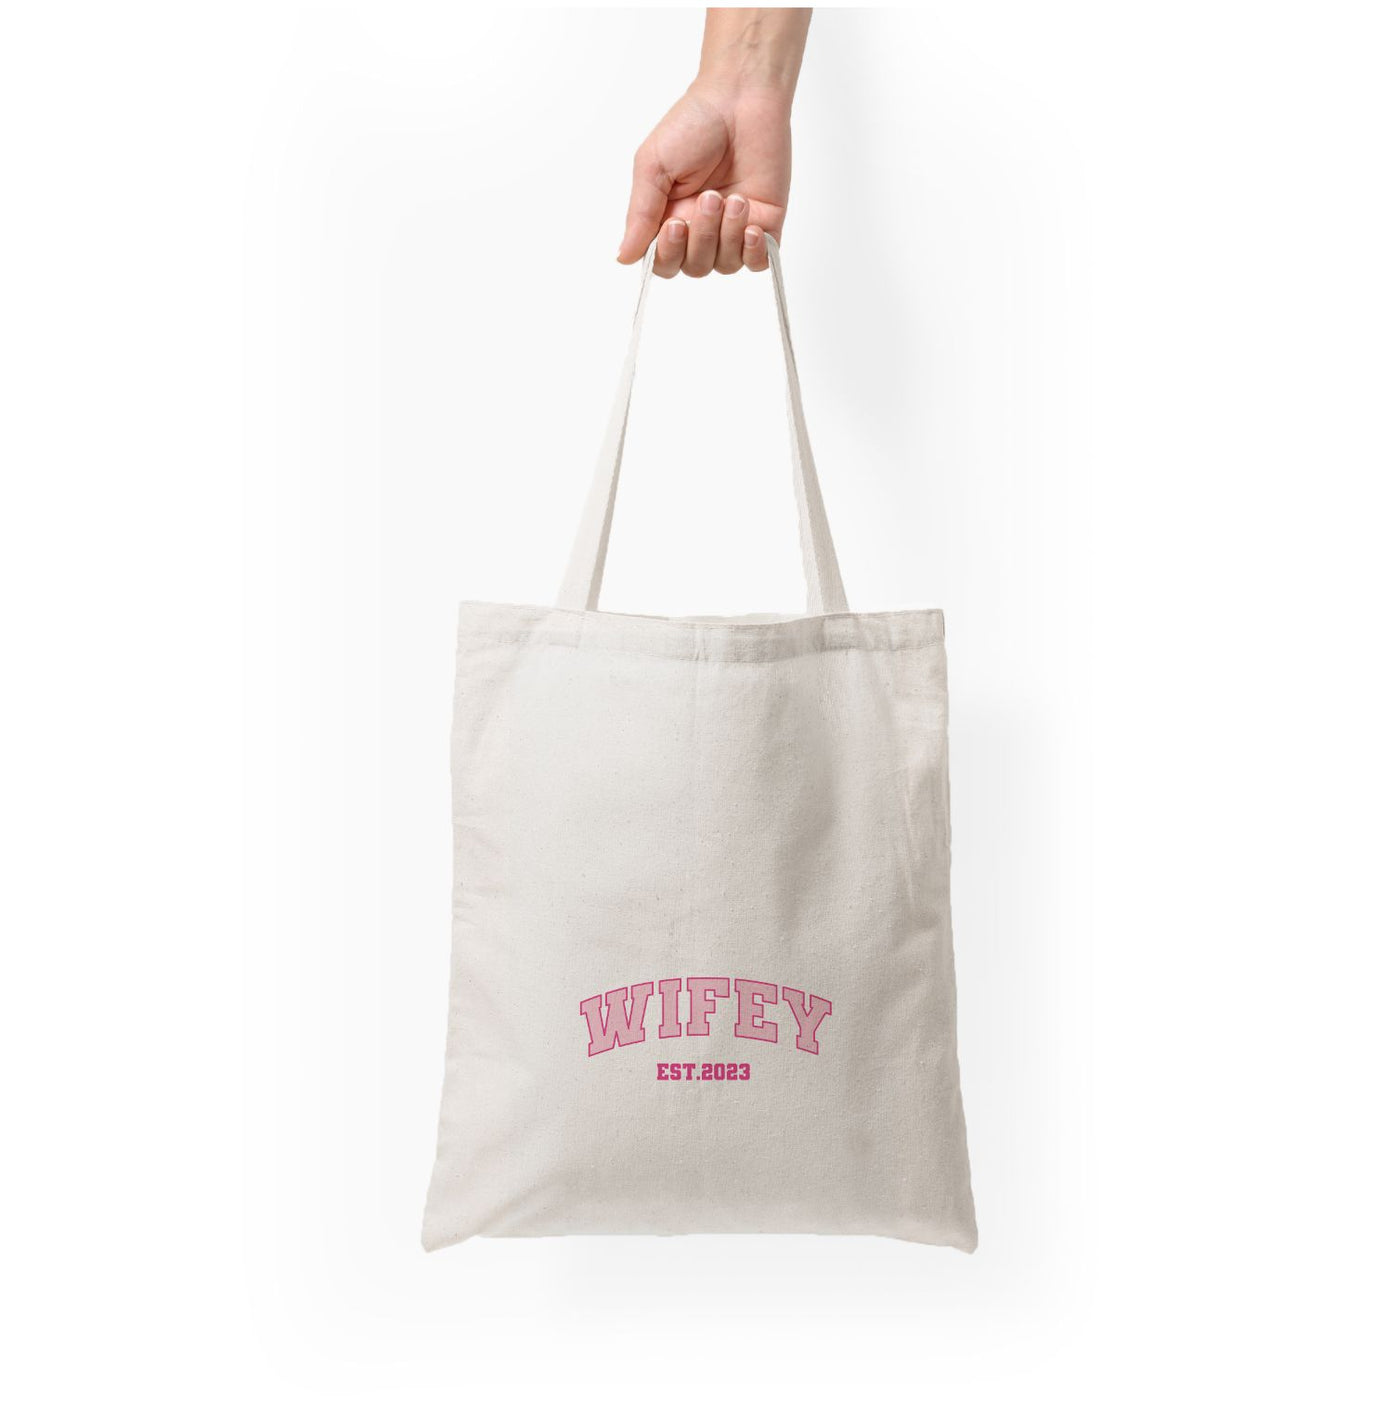 Wifey - Bridal Tote Bag